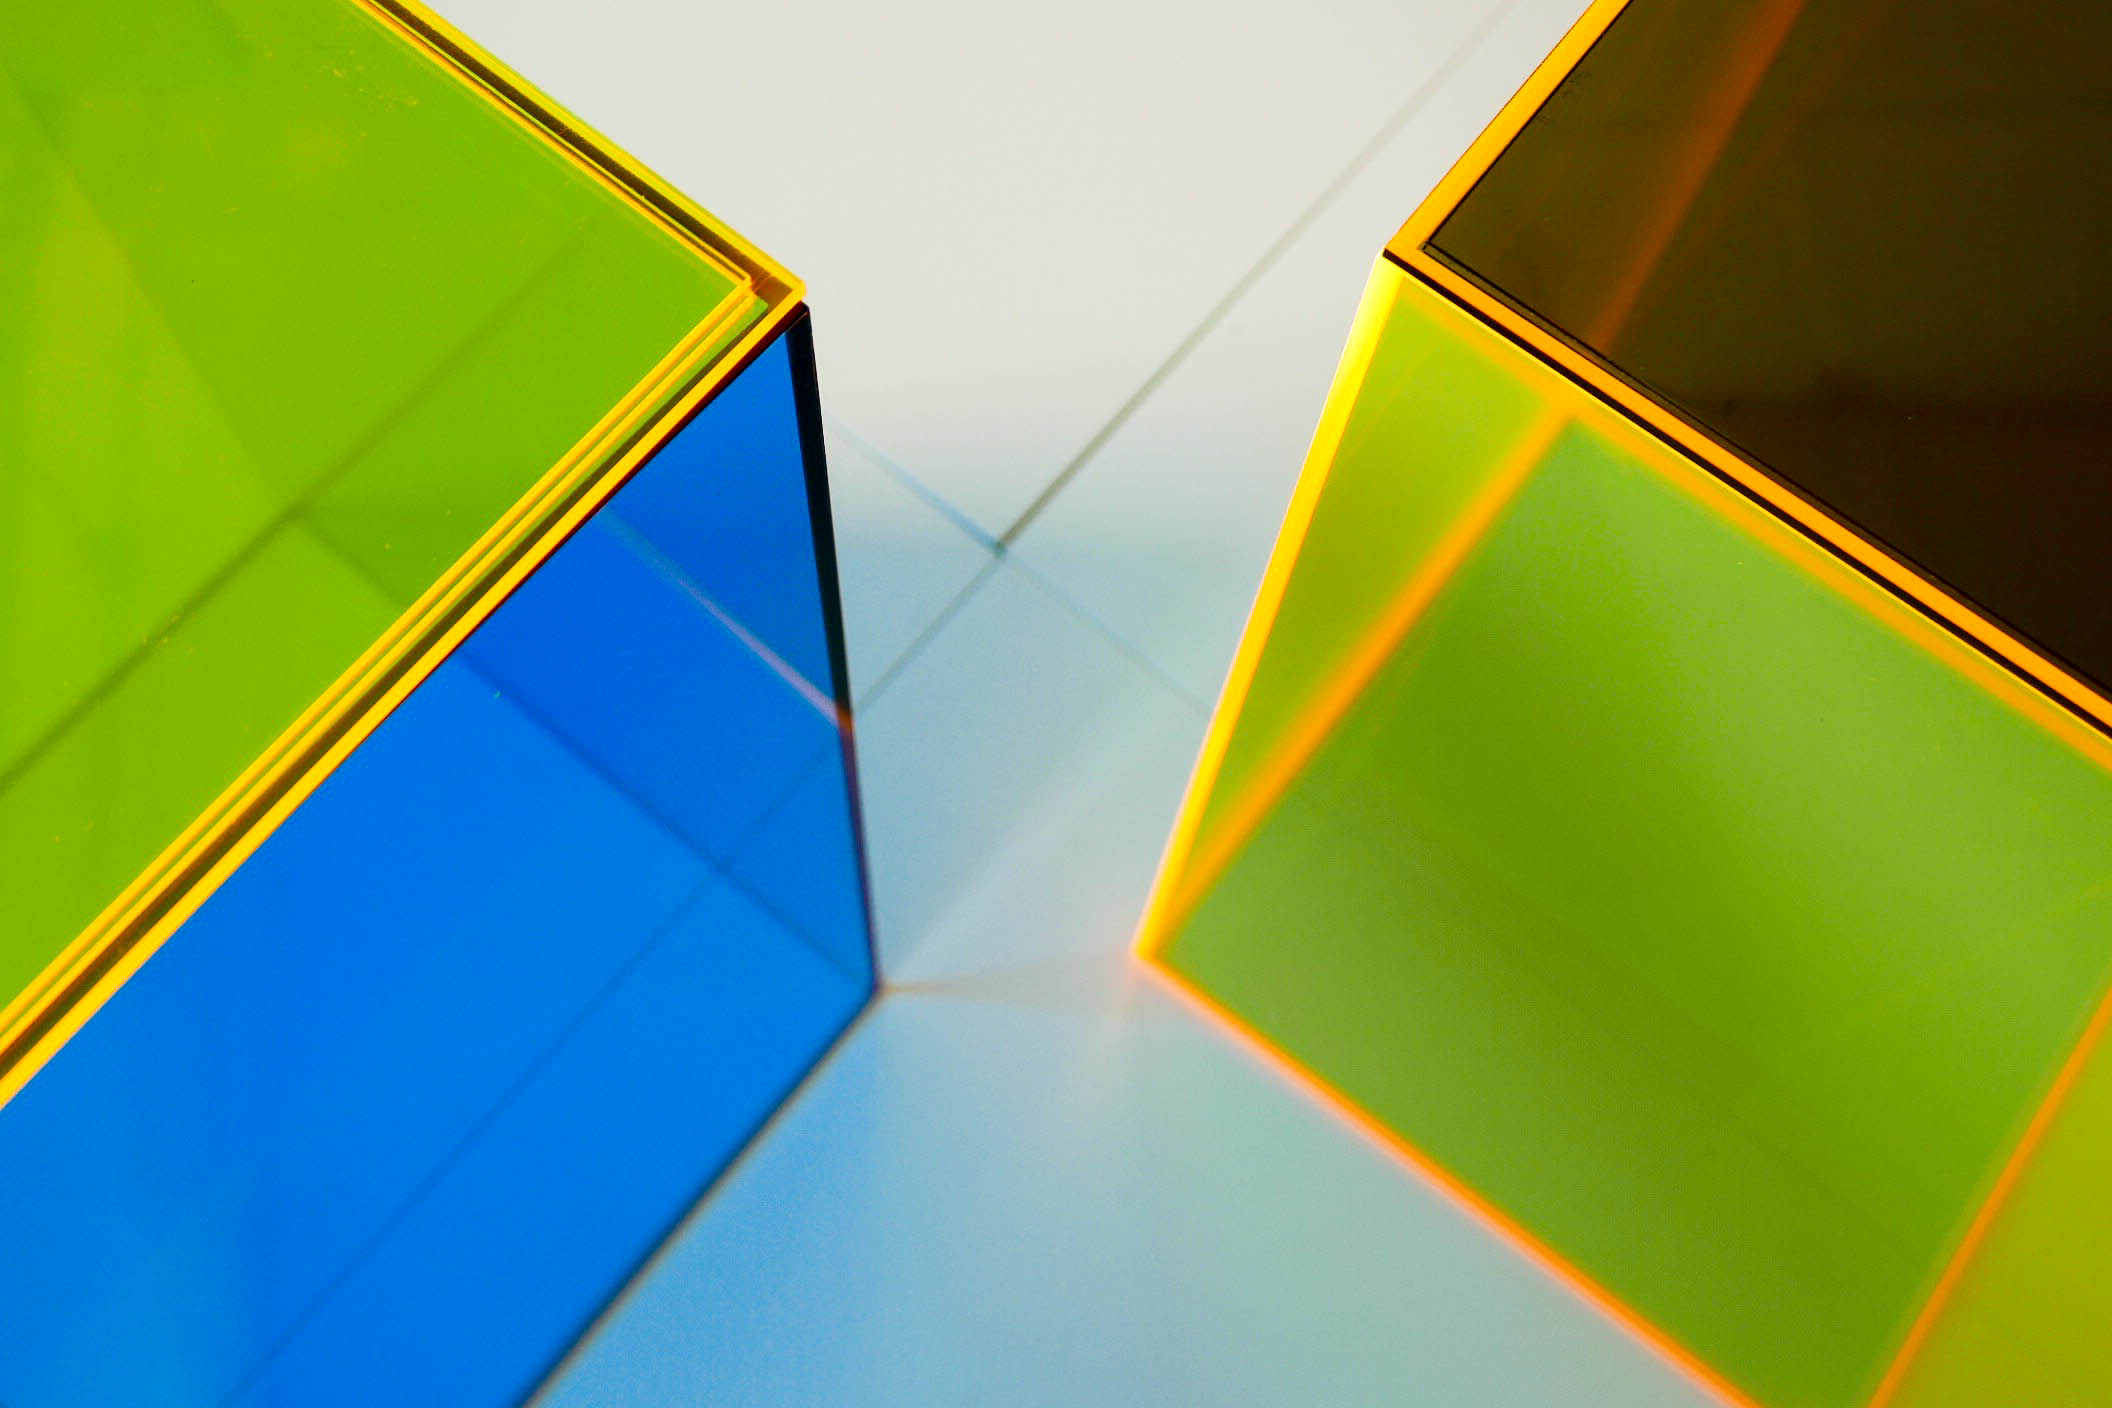 Cubes in conversation